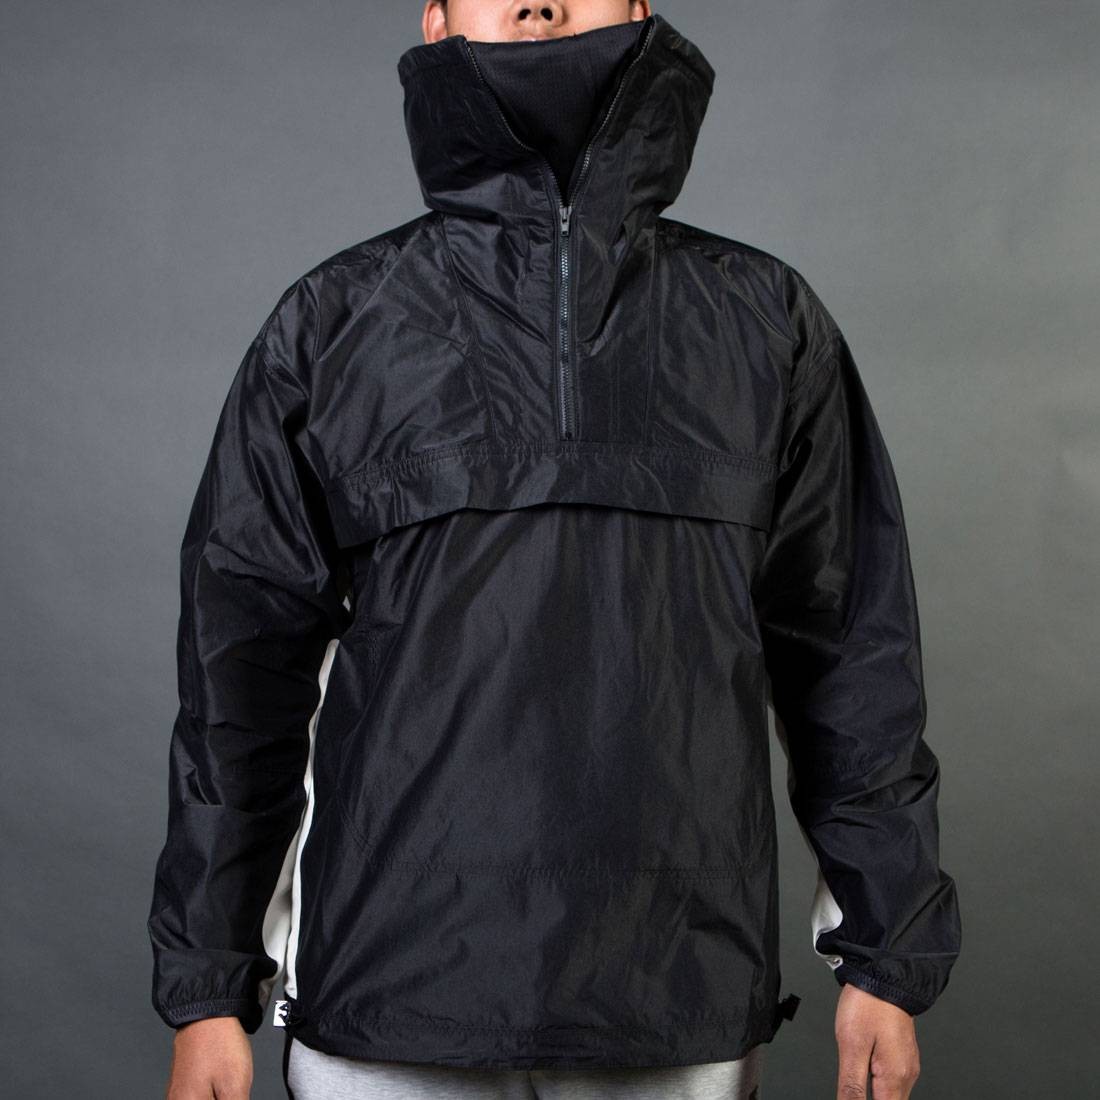 Adidas Consortium Day One Men Carbon Windbreaker Jacket black peyote